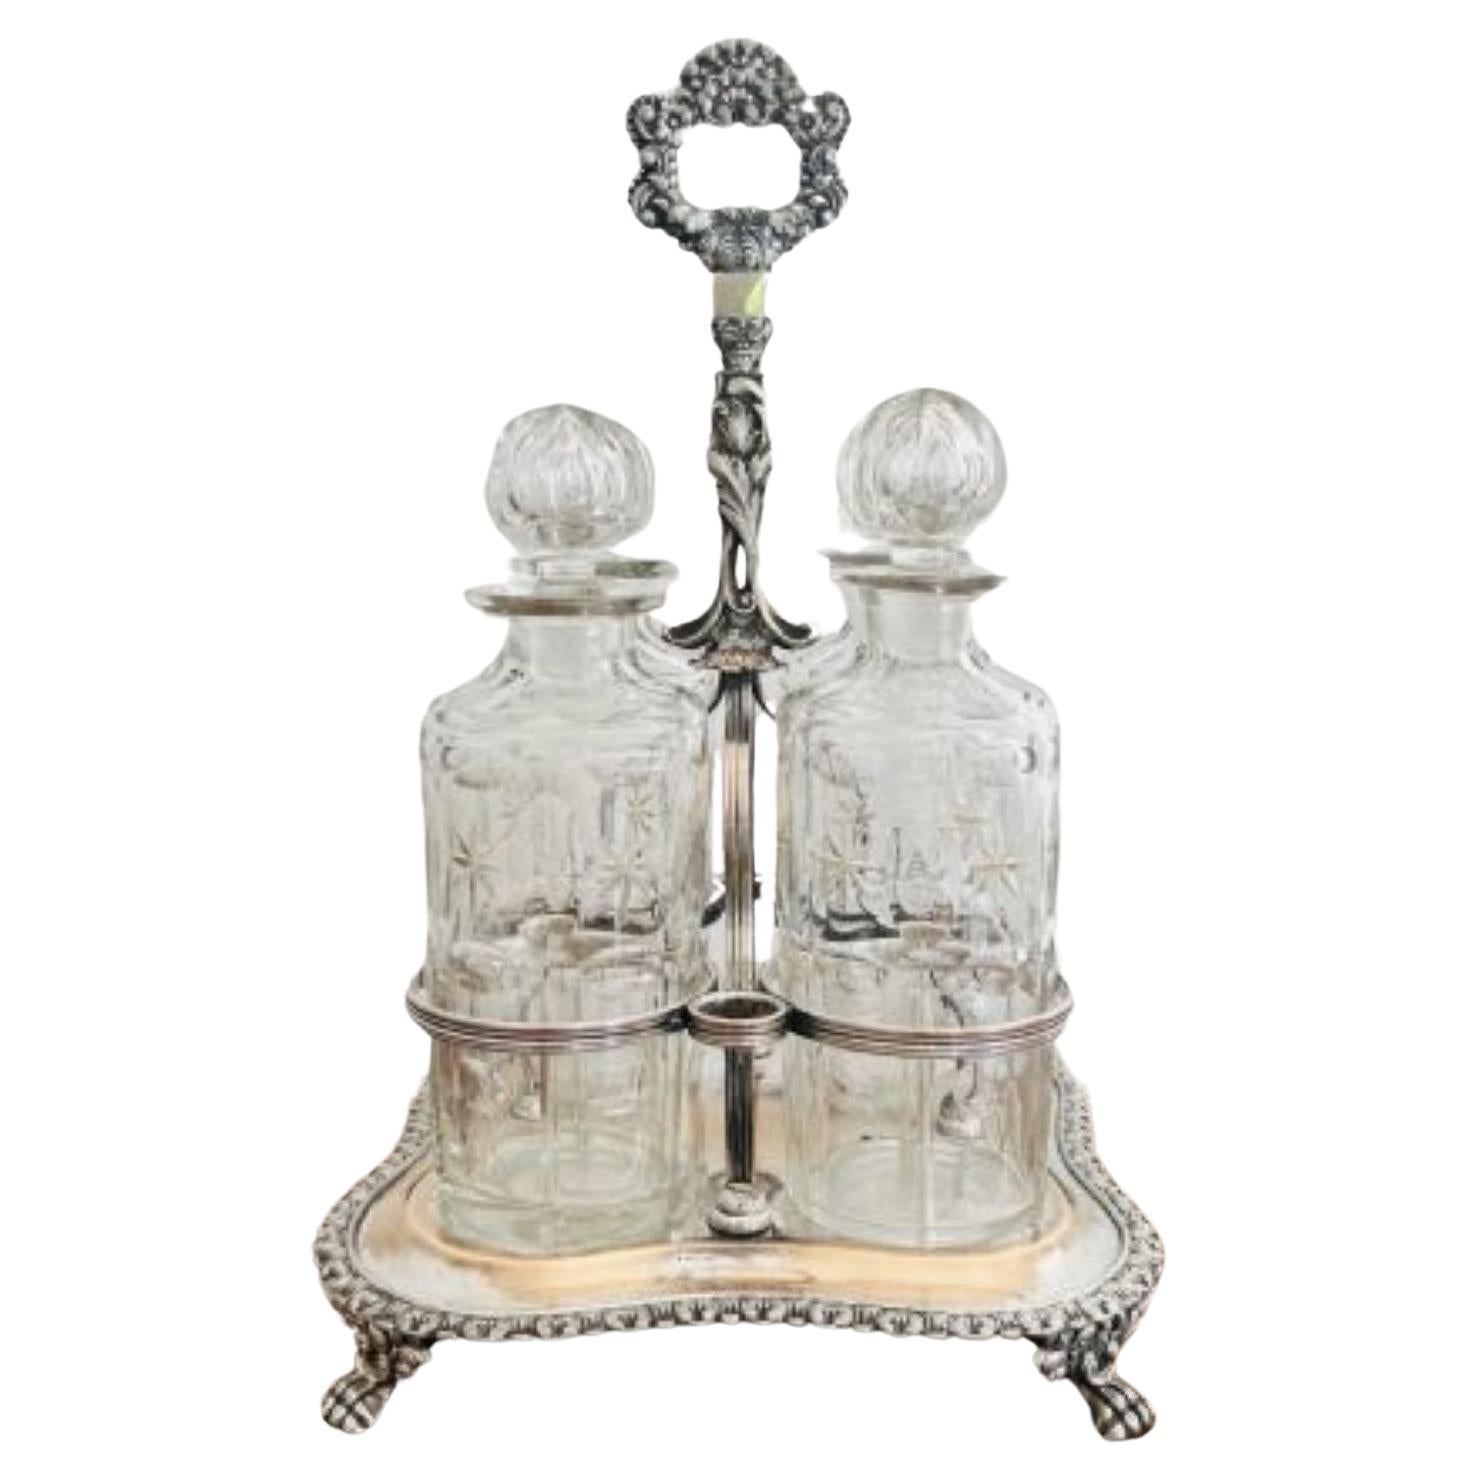 Fantastic quality antique Victorian quality cut glass decanters